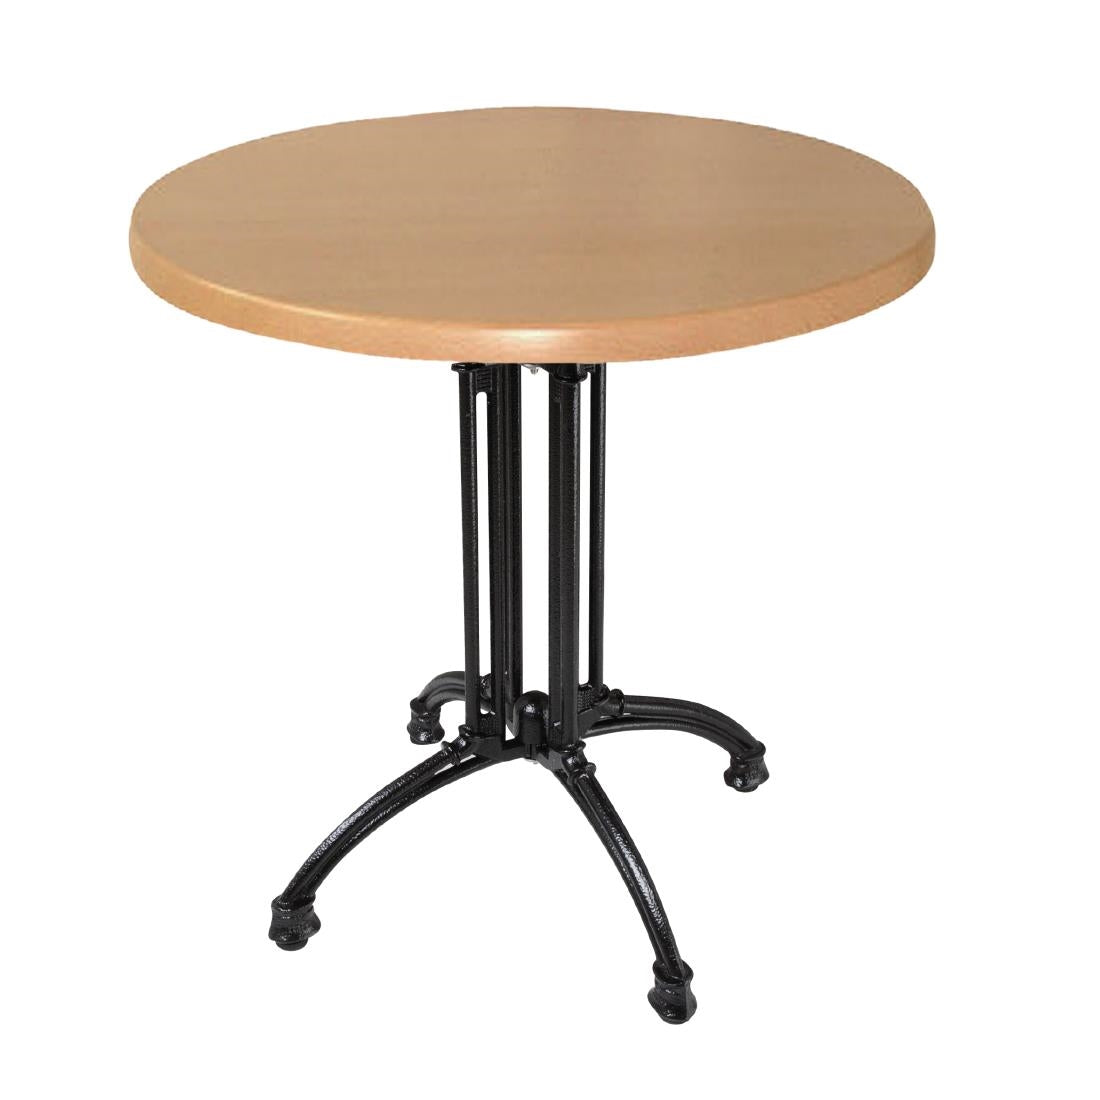 Bolero Cast Iron Decorative Brasserie Table Leg Base JD Catering Equipment Solutions Ltd